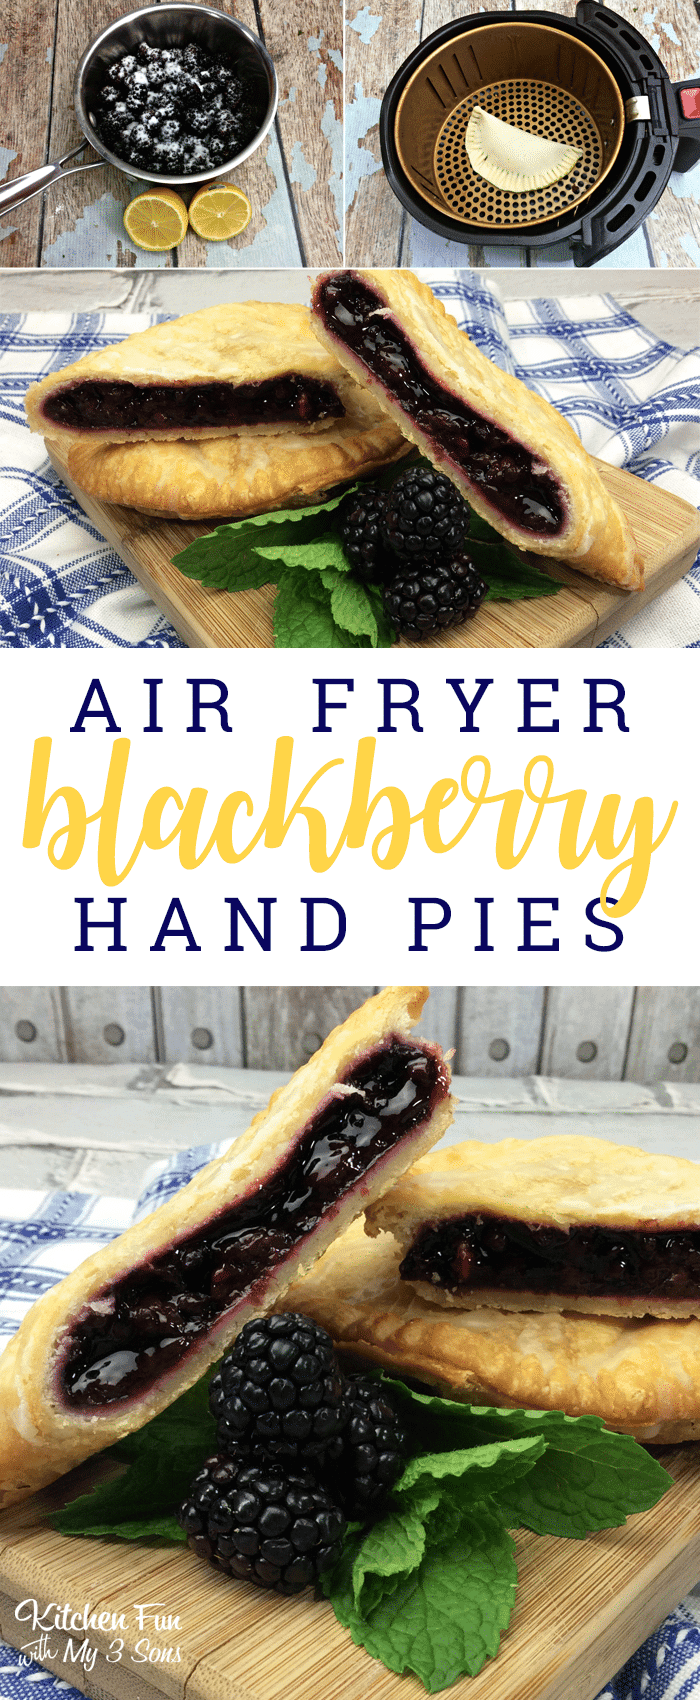 Air Fryer Blackberry Hand Pies